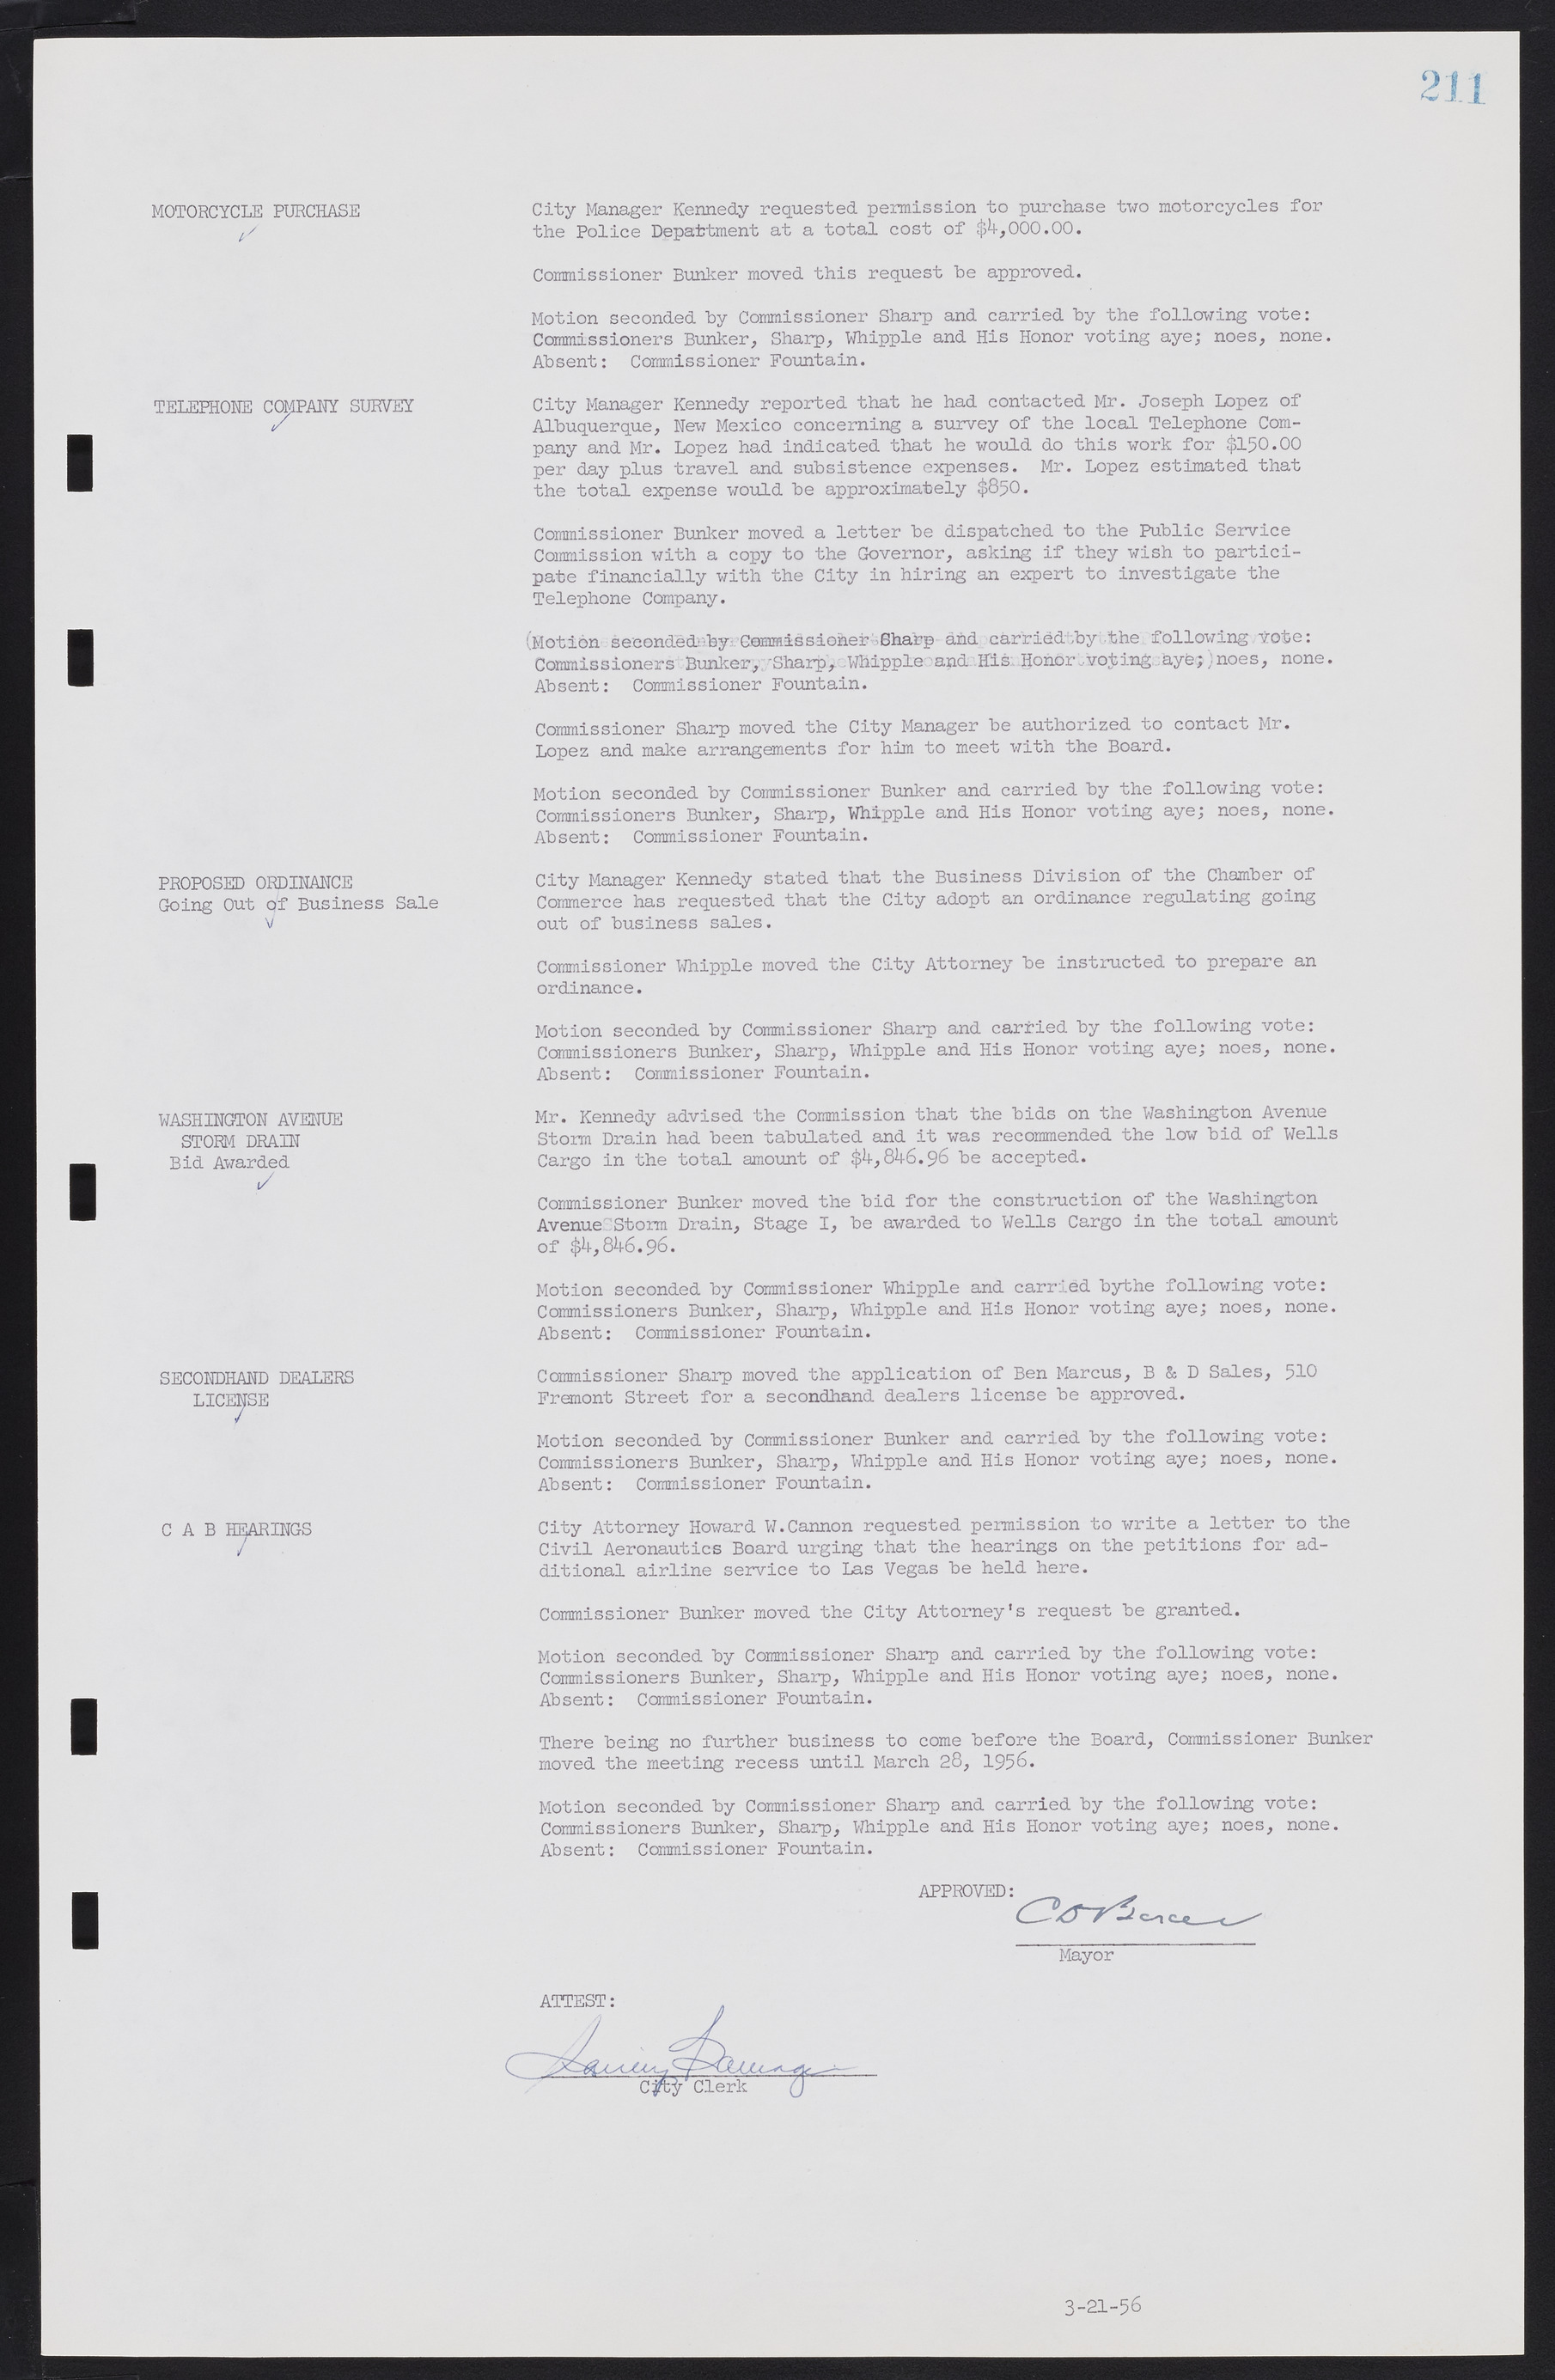 Las Vegas City Commission Minutes, September 21, 1955 to November 20, 1957, lvc000010-229